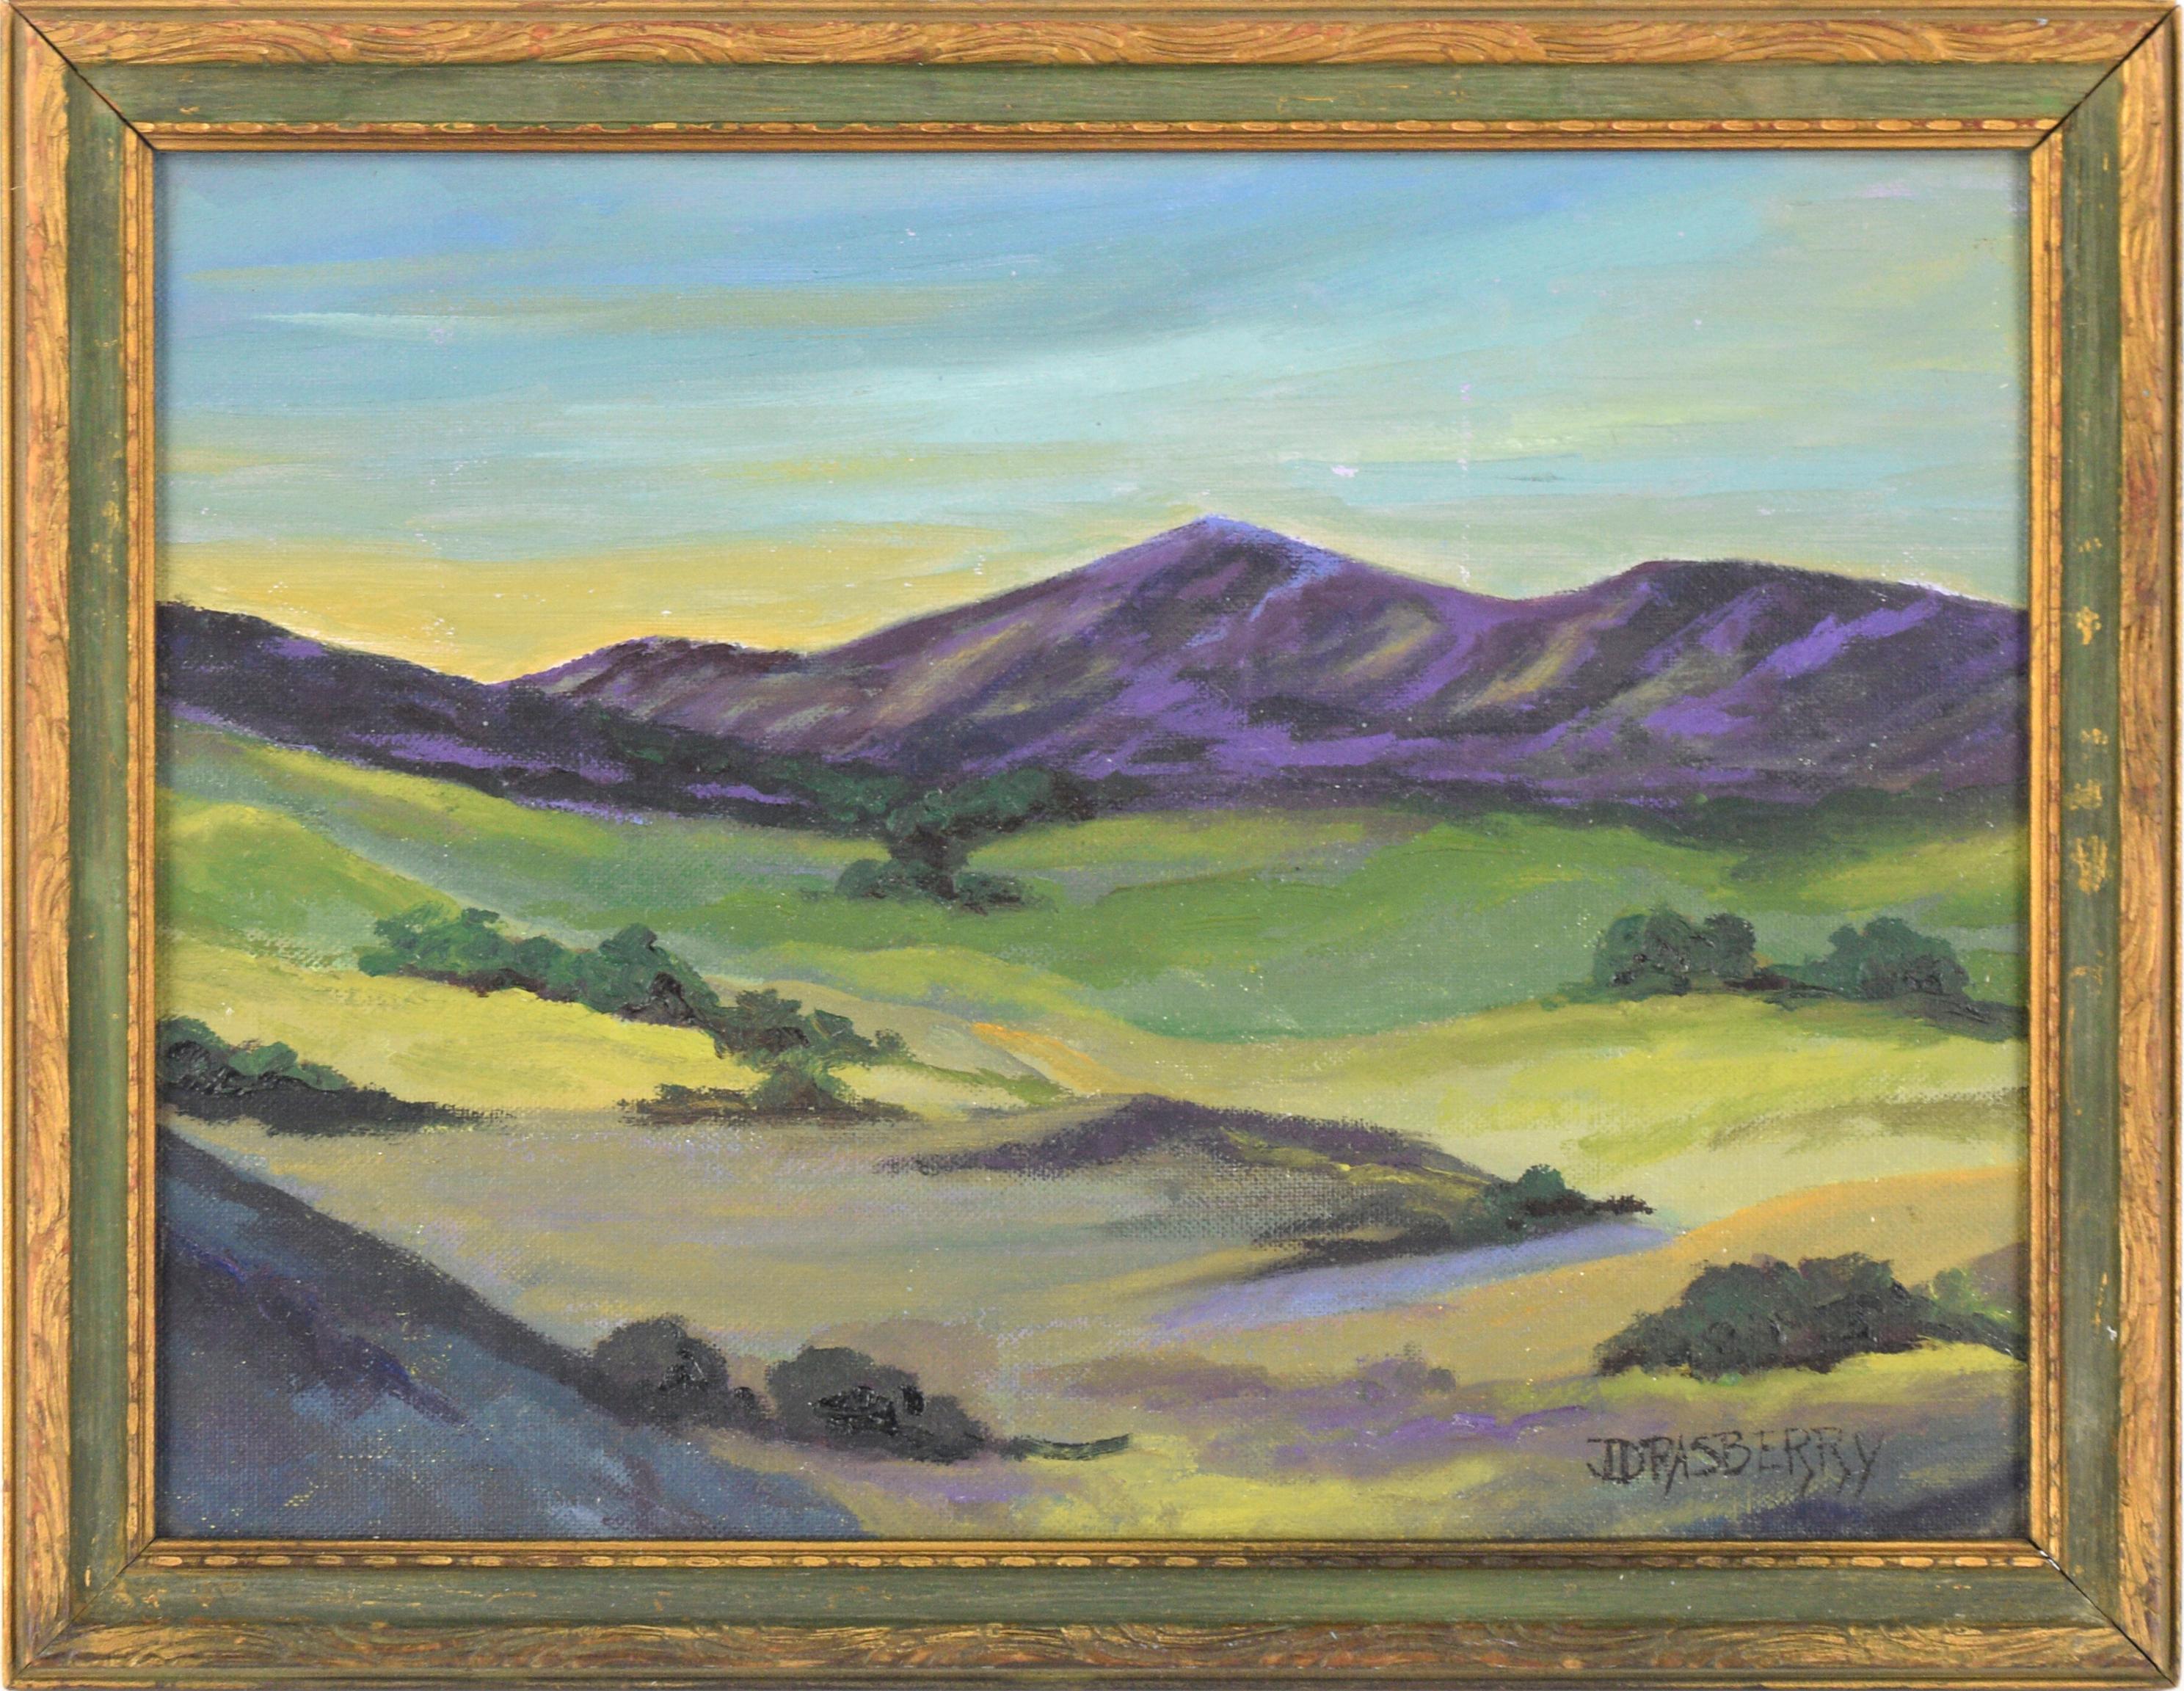 Jesse Don Rasberry  Landscape Painting - Purple Mountains Beyond the Valley - Landscape